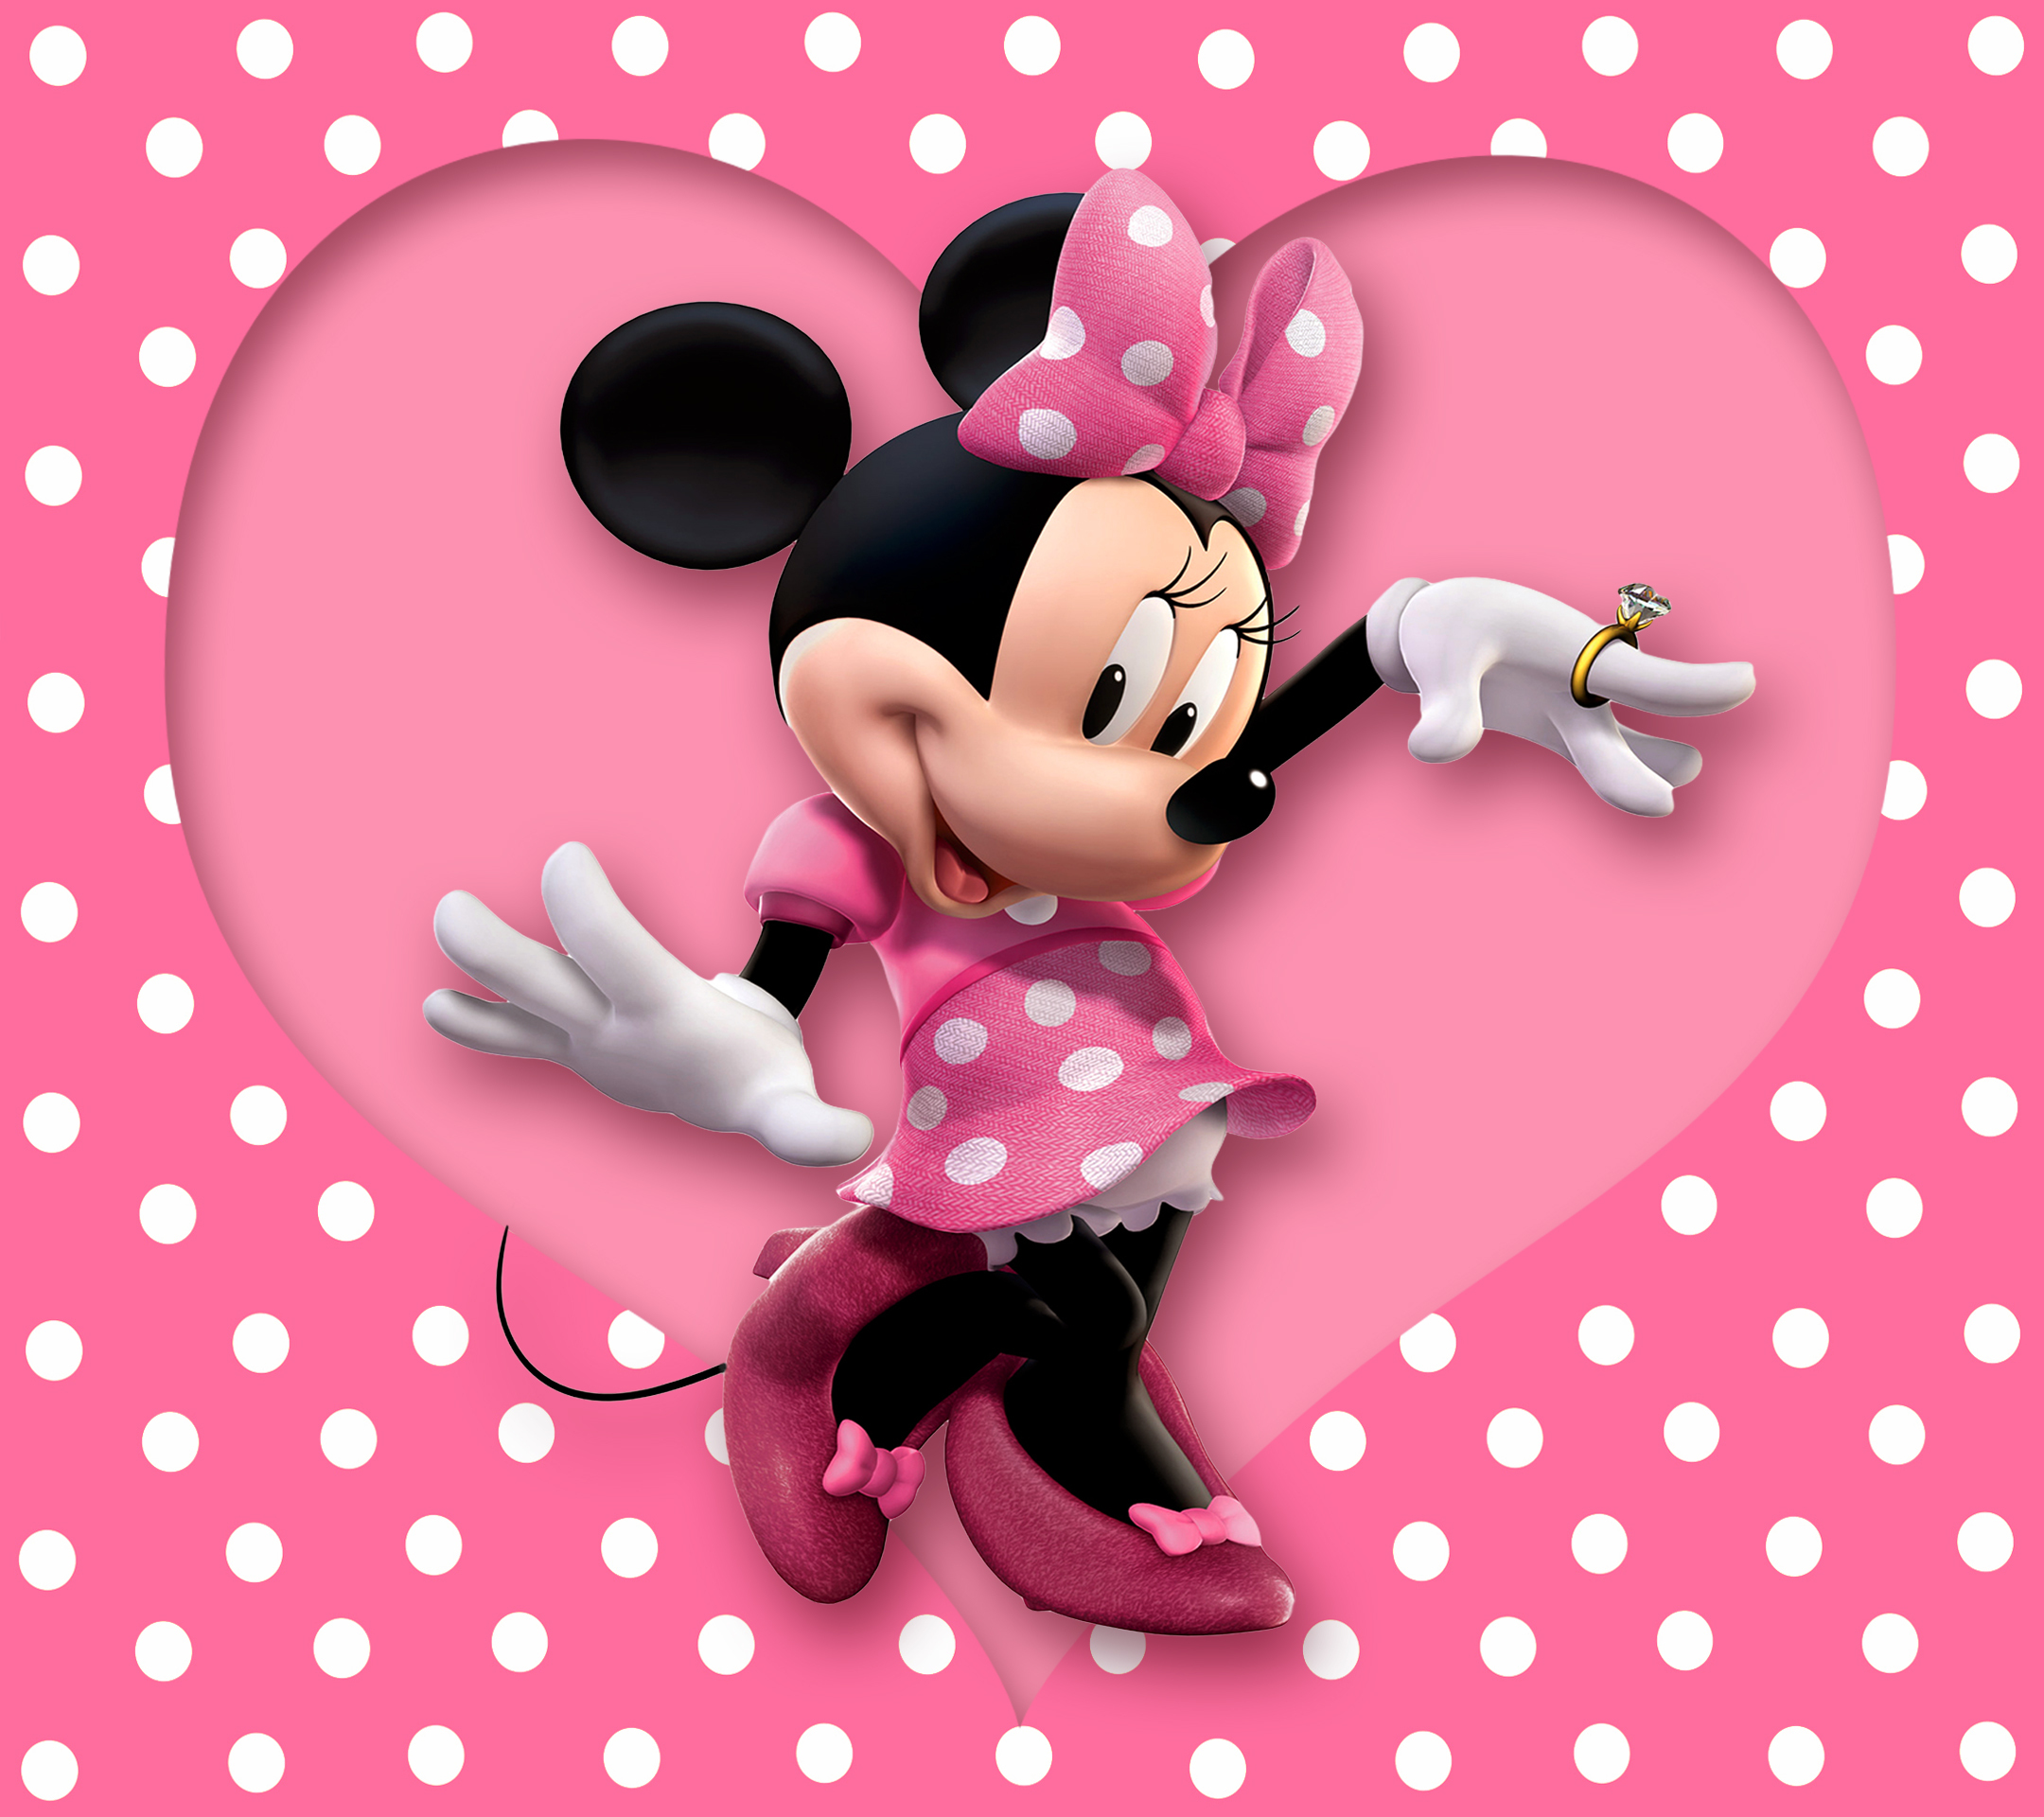 Minnie Mouse Desktop Wallpaper on